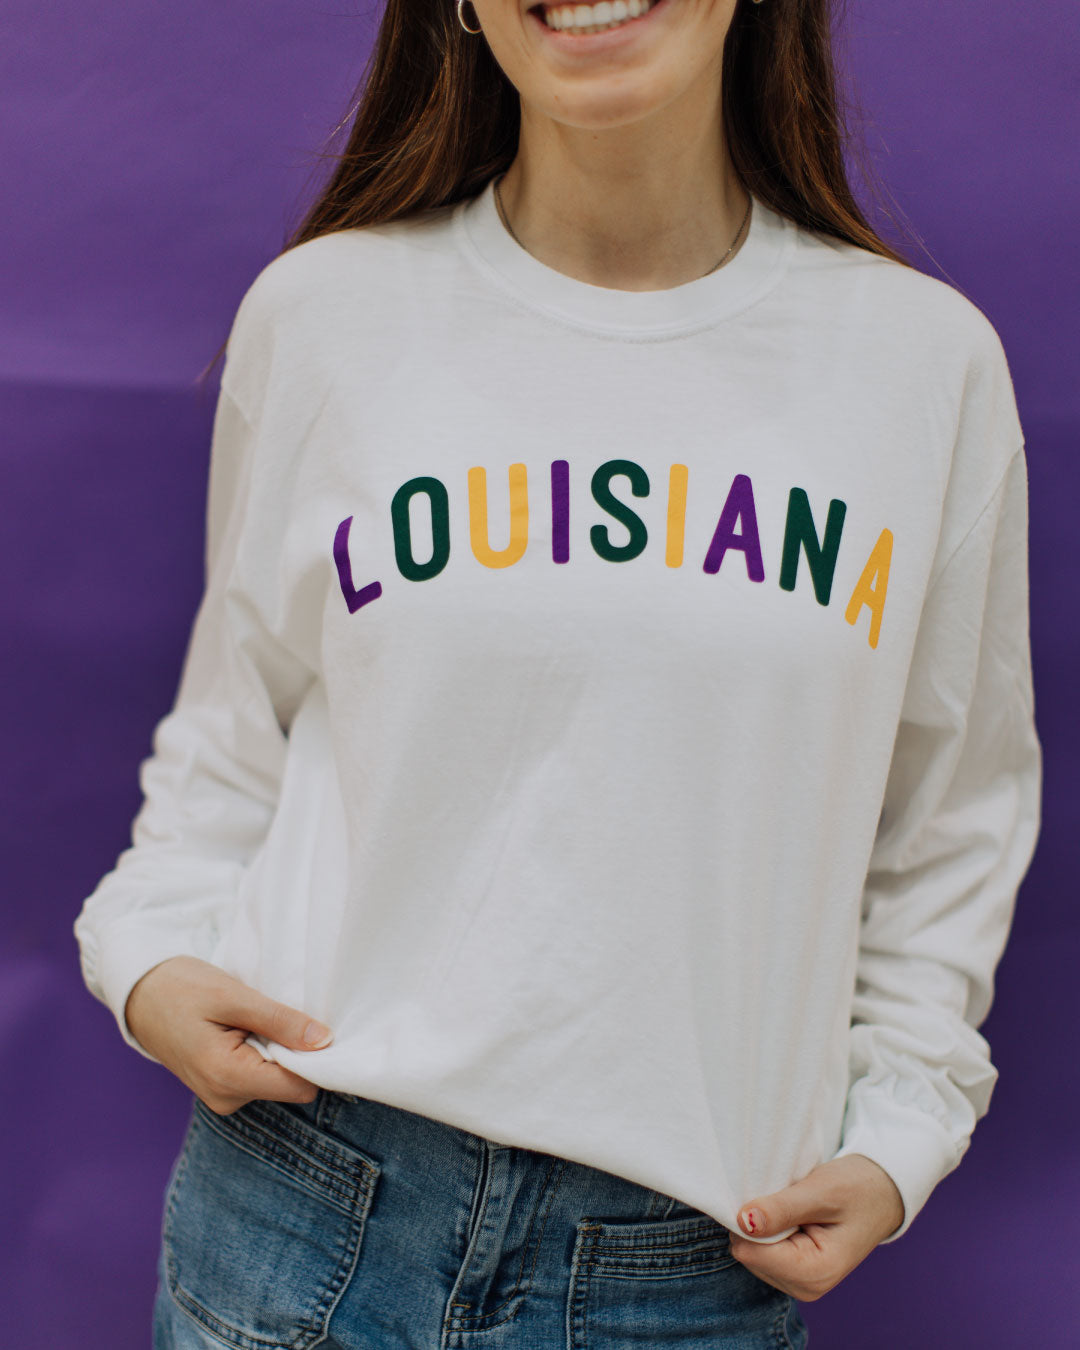 Louisiana Prep – Sweet Baton Rouge® Wholesale